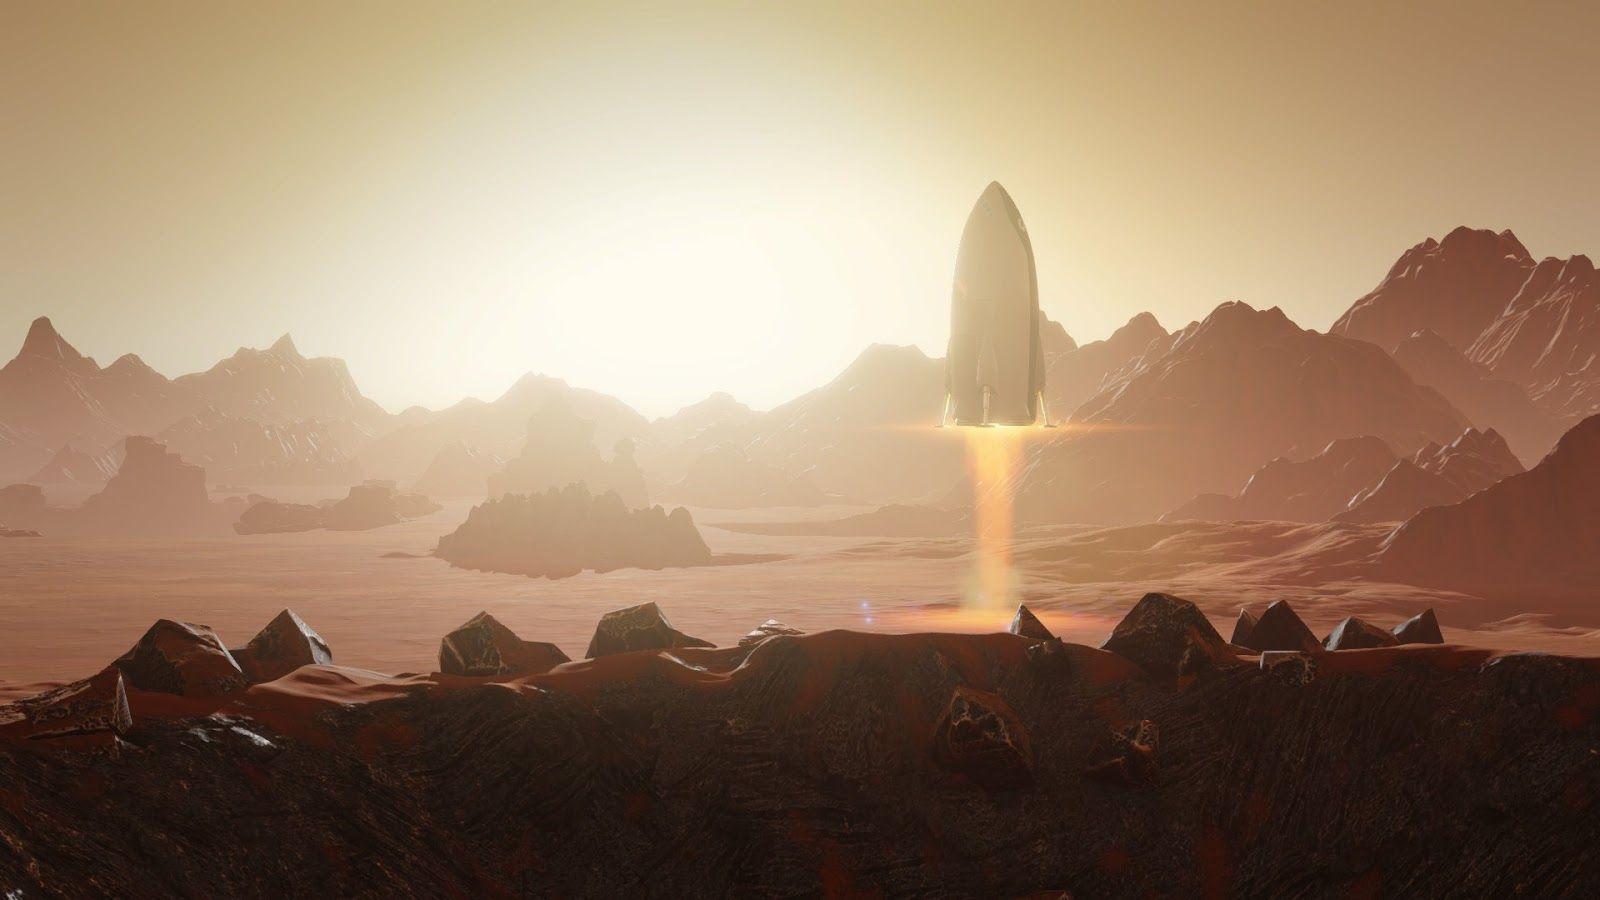 Spaceship landing on Mars from Surviving Mars game future